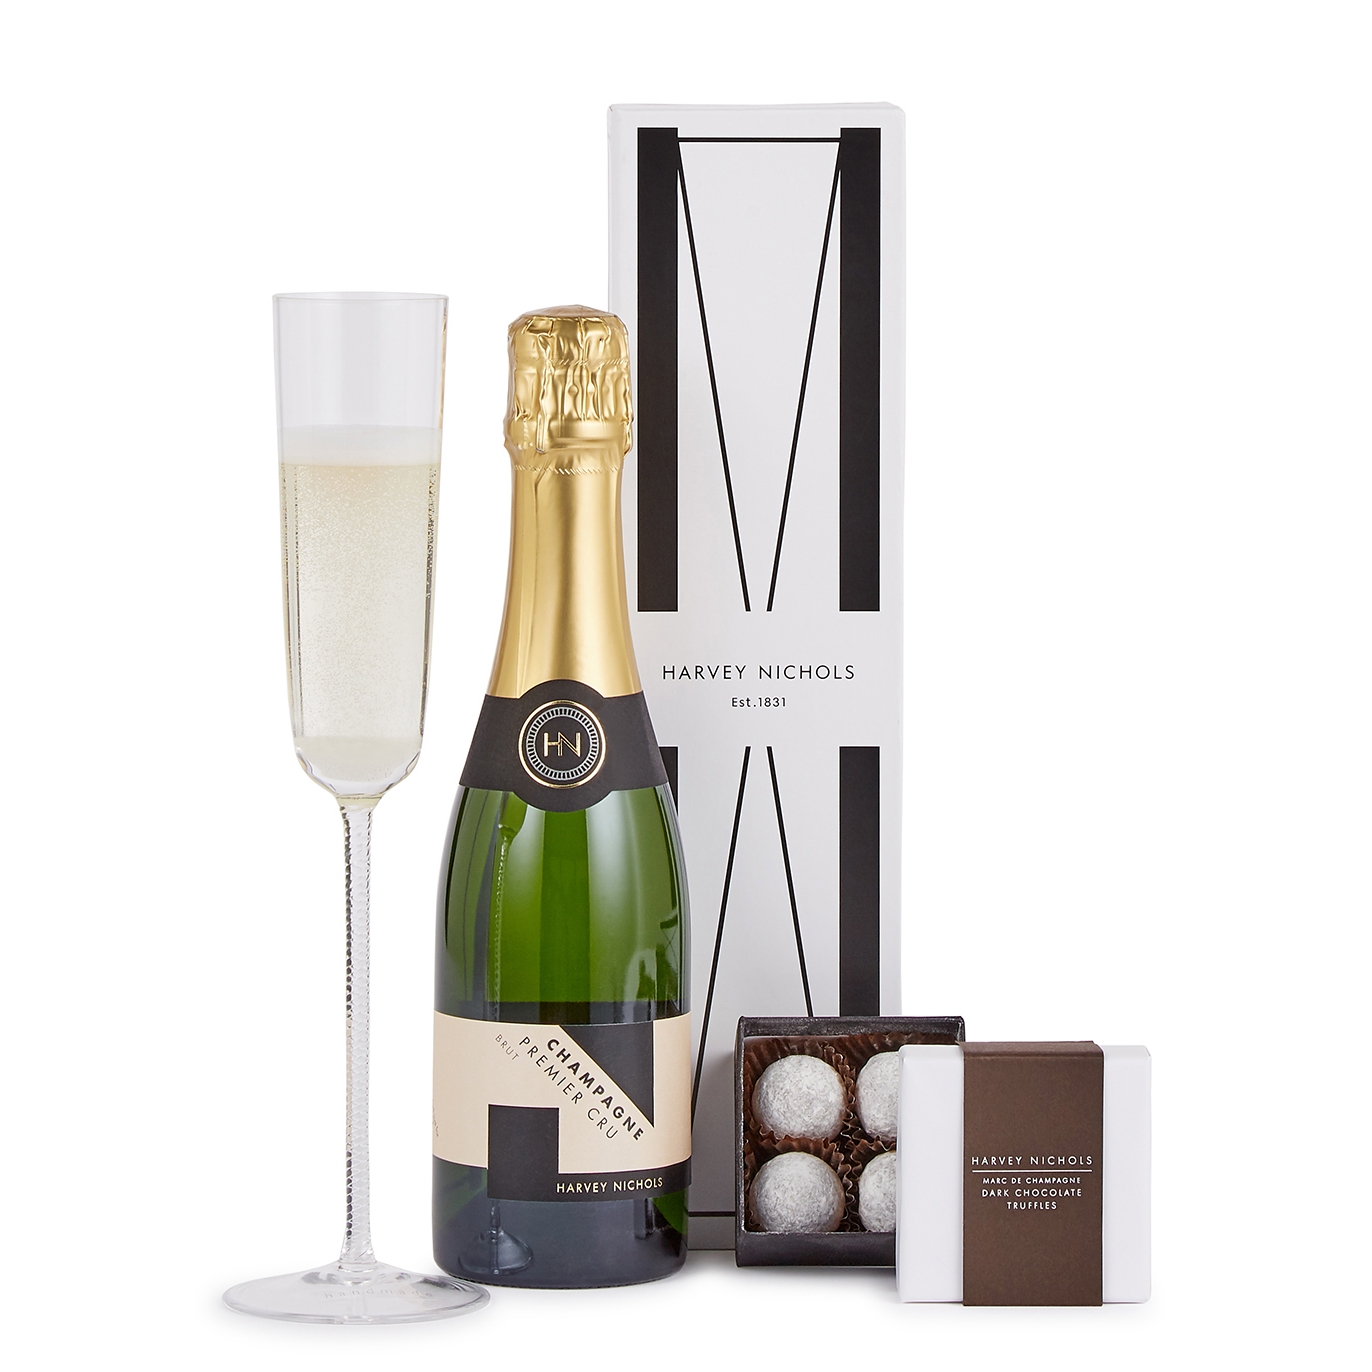 Harvey Nichols Champagne Half Bottle & Dark Chocolate, Hamper, Truffle